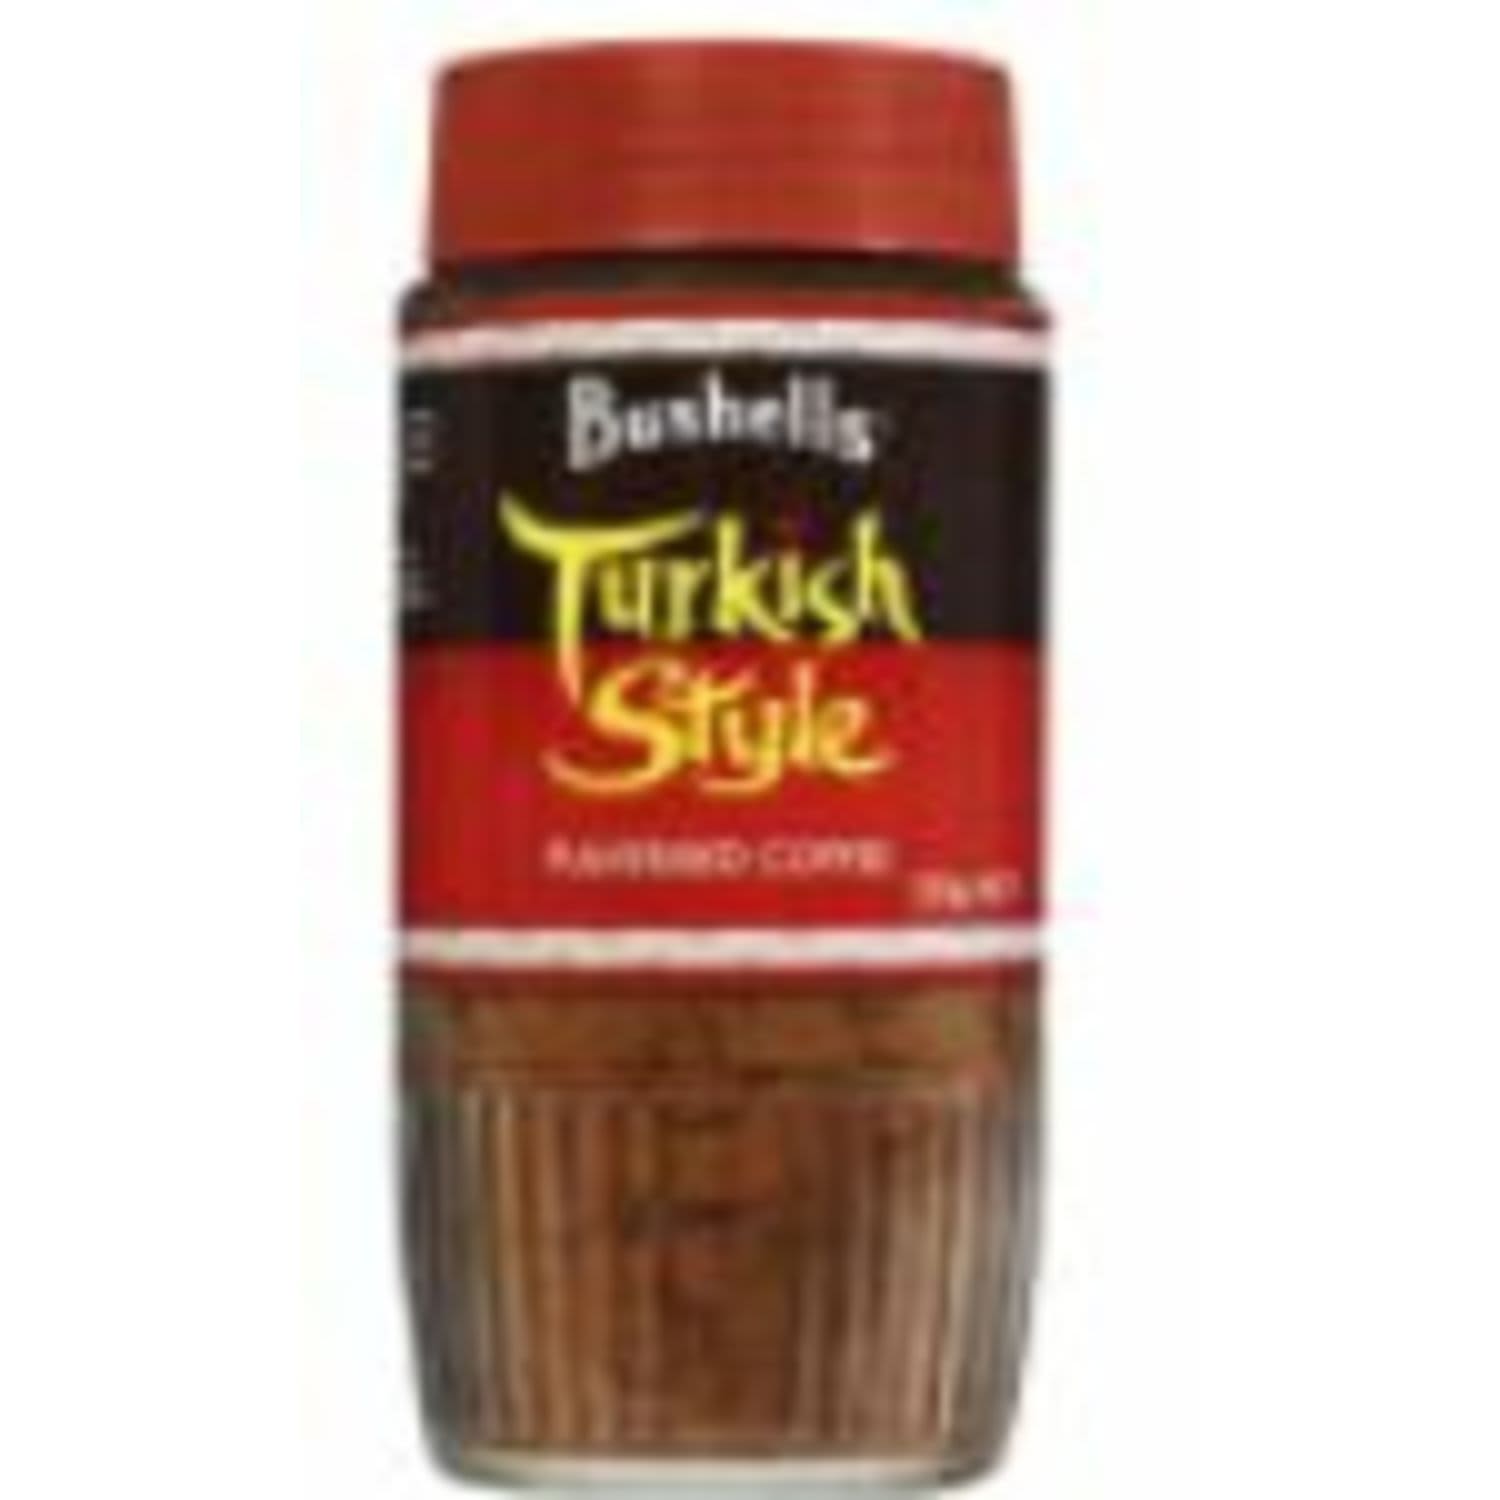 Bushells Coffee Turkish Style, 250 Gram